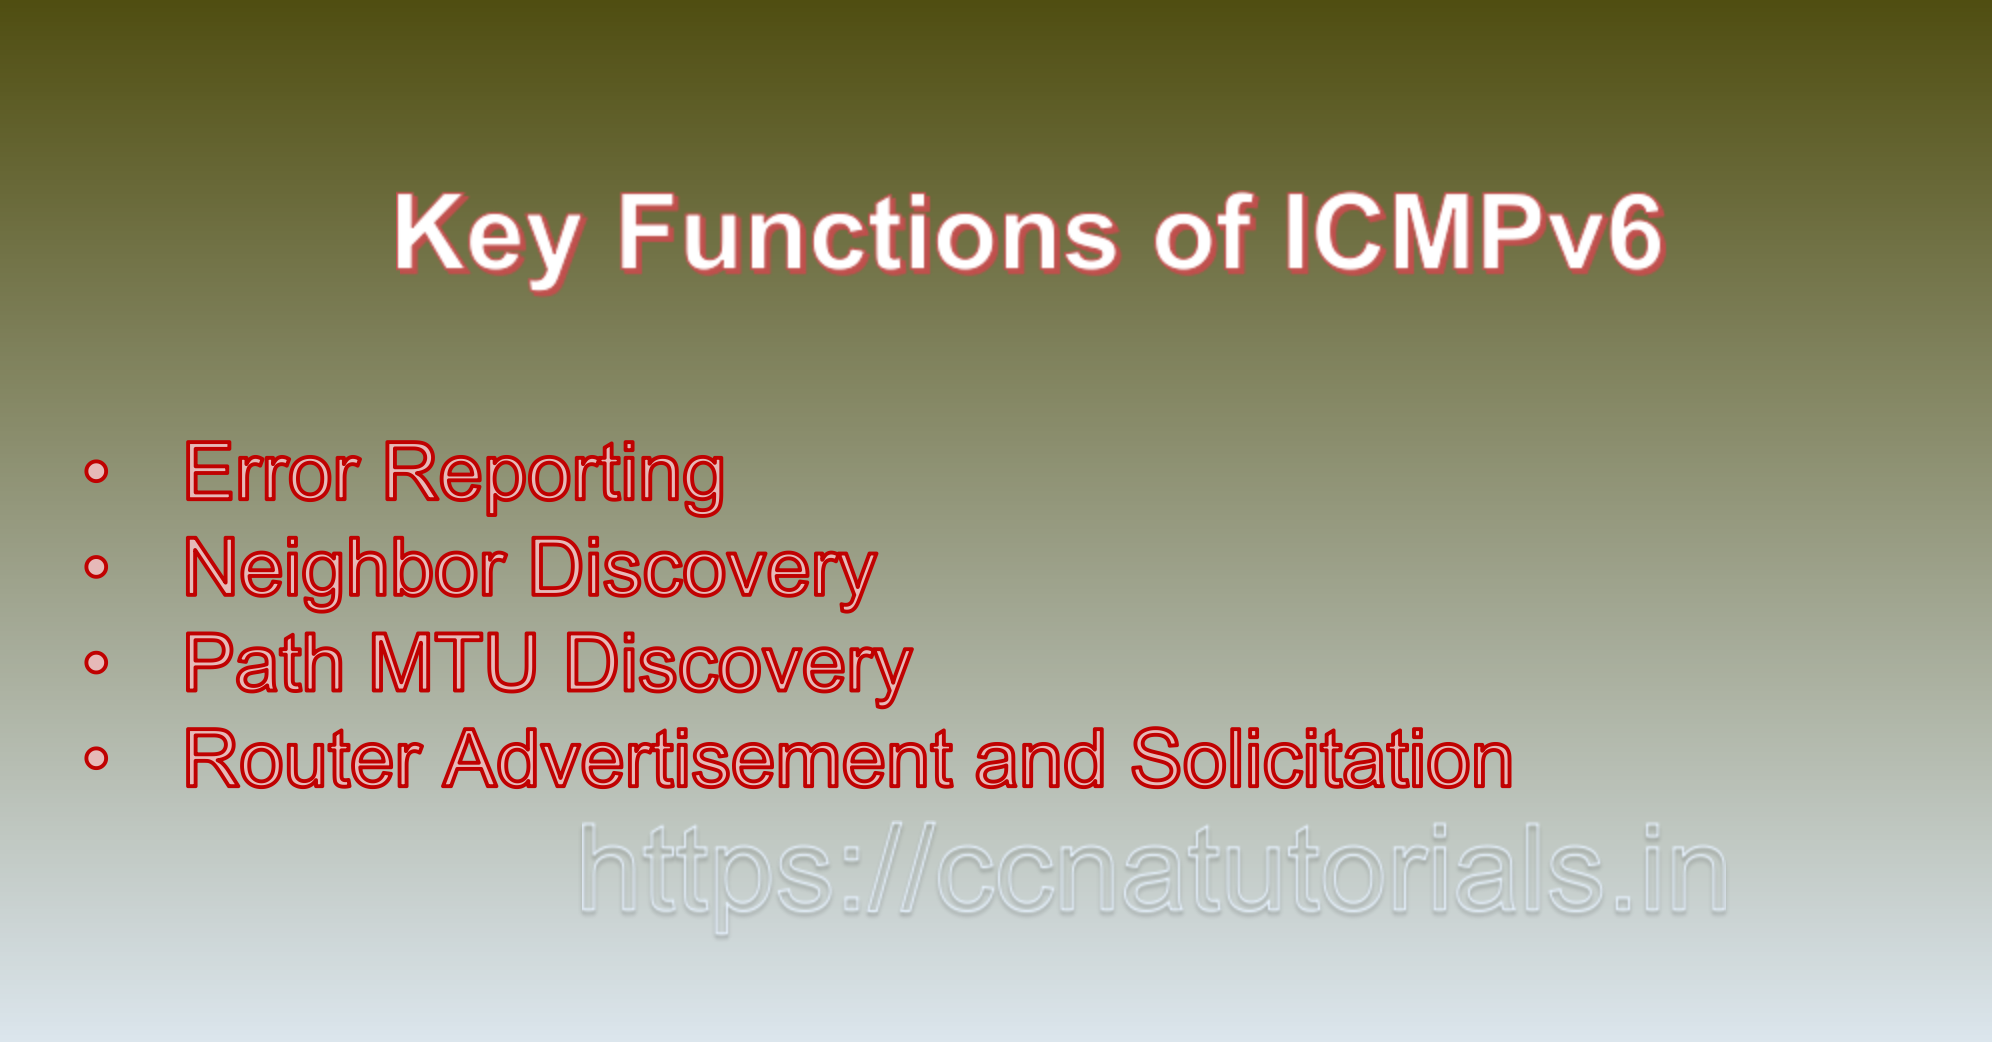  IPv6 Internet Control Message Protocol (ICMPv6), ccna, ccna tutorials